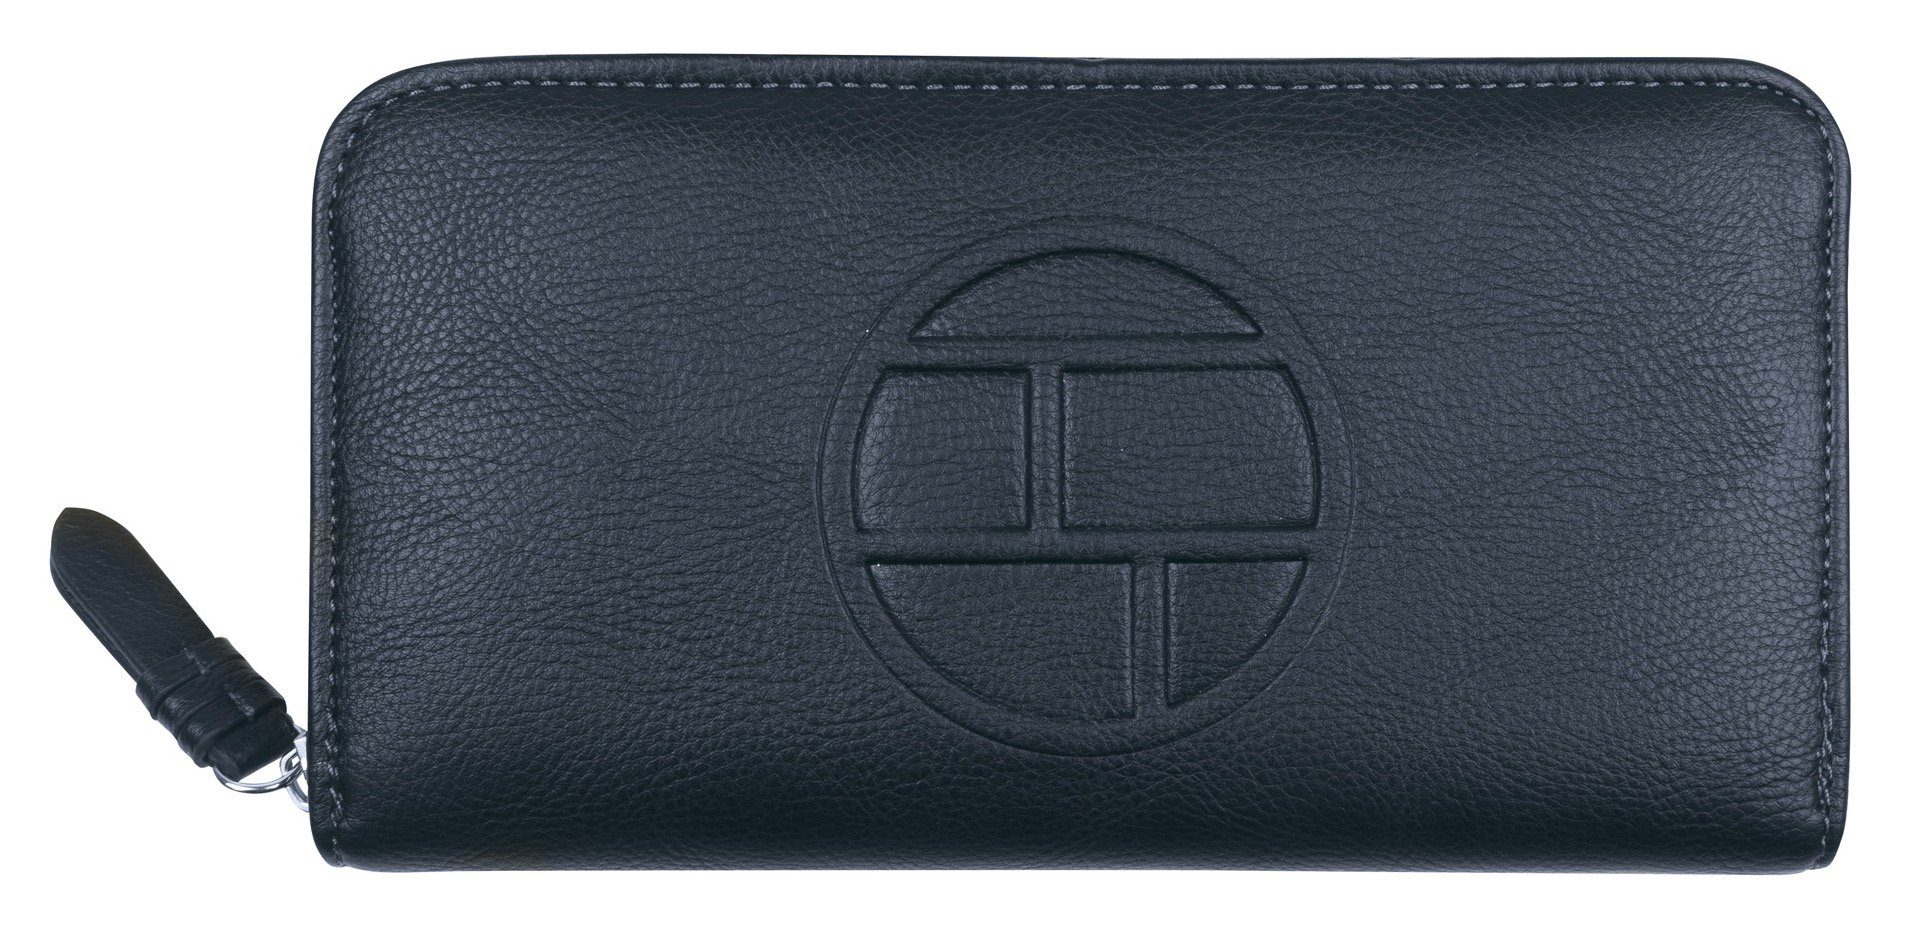 TAILOR Geldbörse dark-blue ROSABEL Prägung Logo TOM zip wallet, Long mit schöner